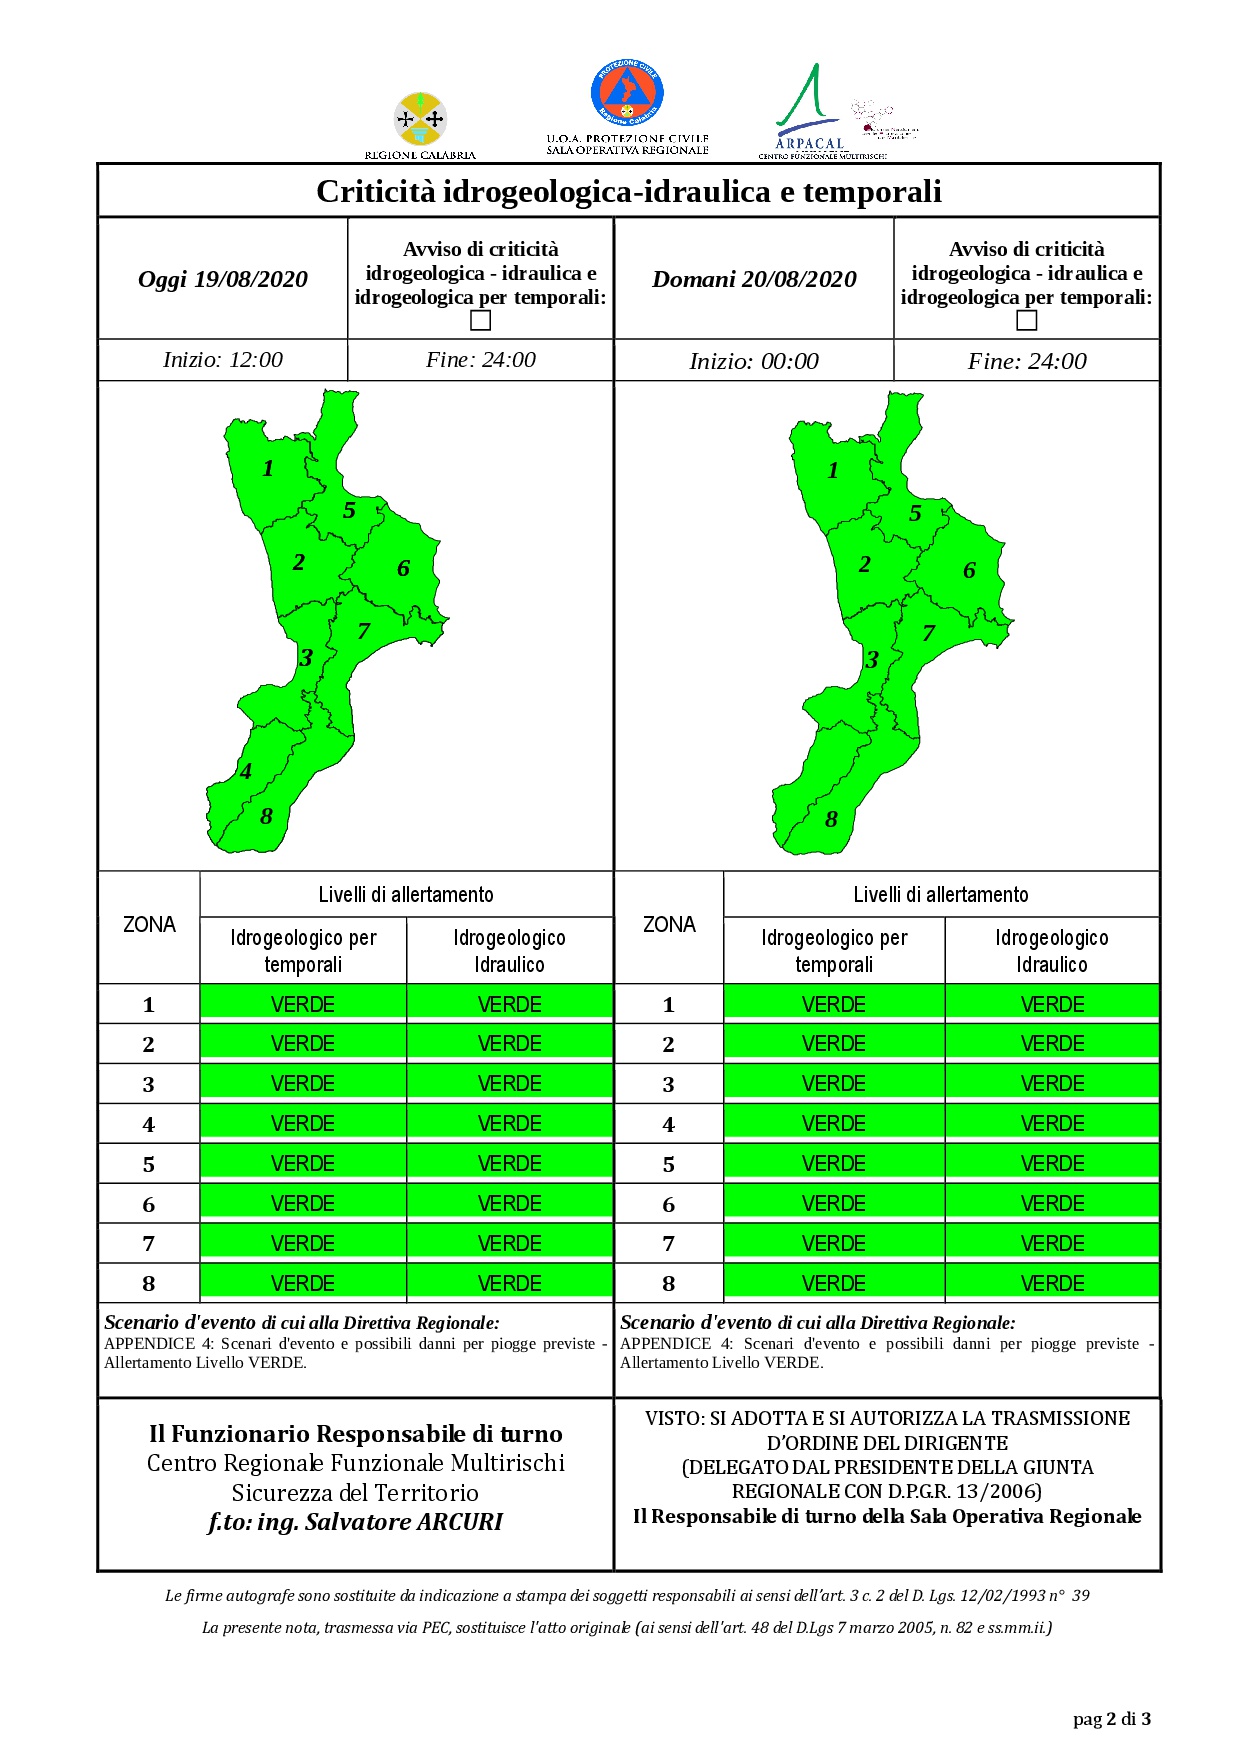 Criticità idrogeologica-idraulica e temporali in Calabria 19-08-2020